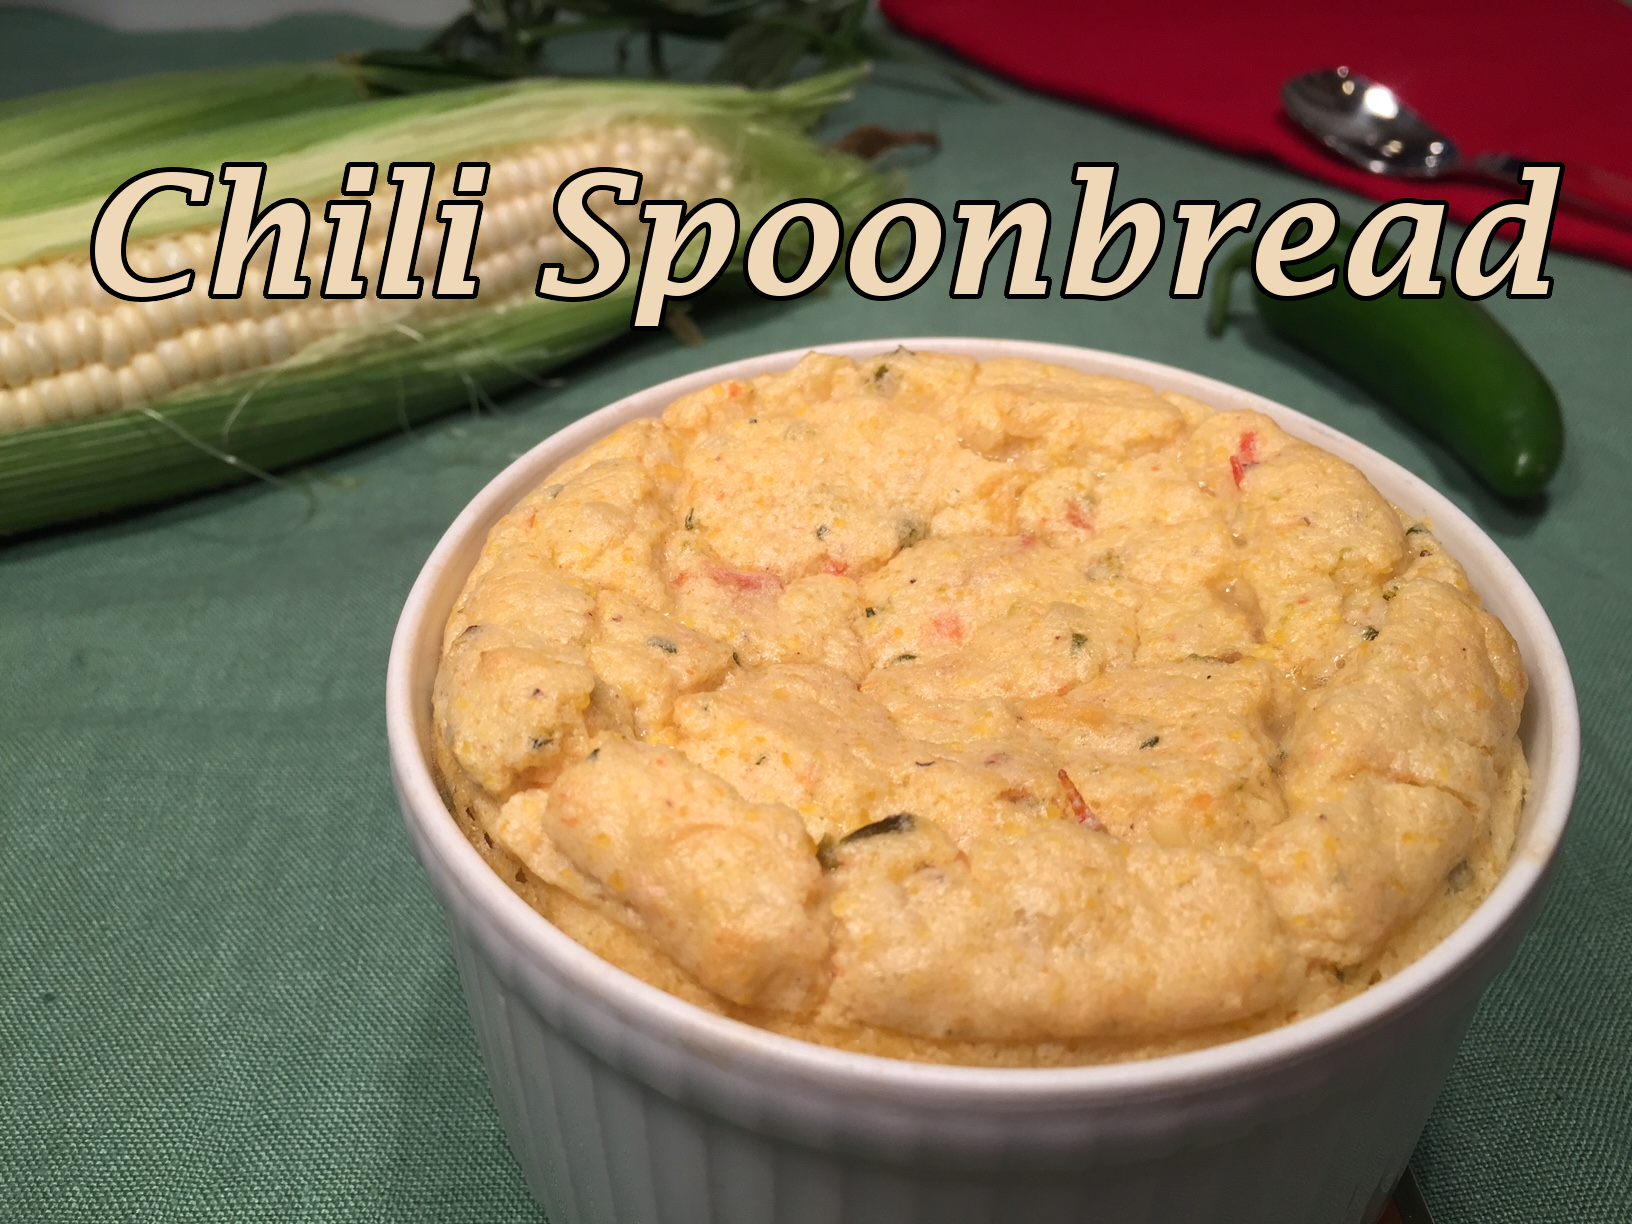 chili spoonbread1 text